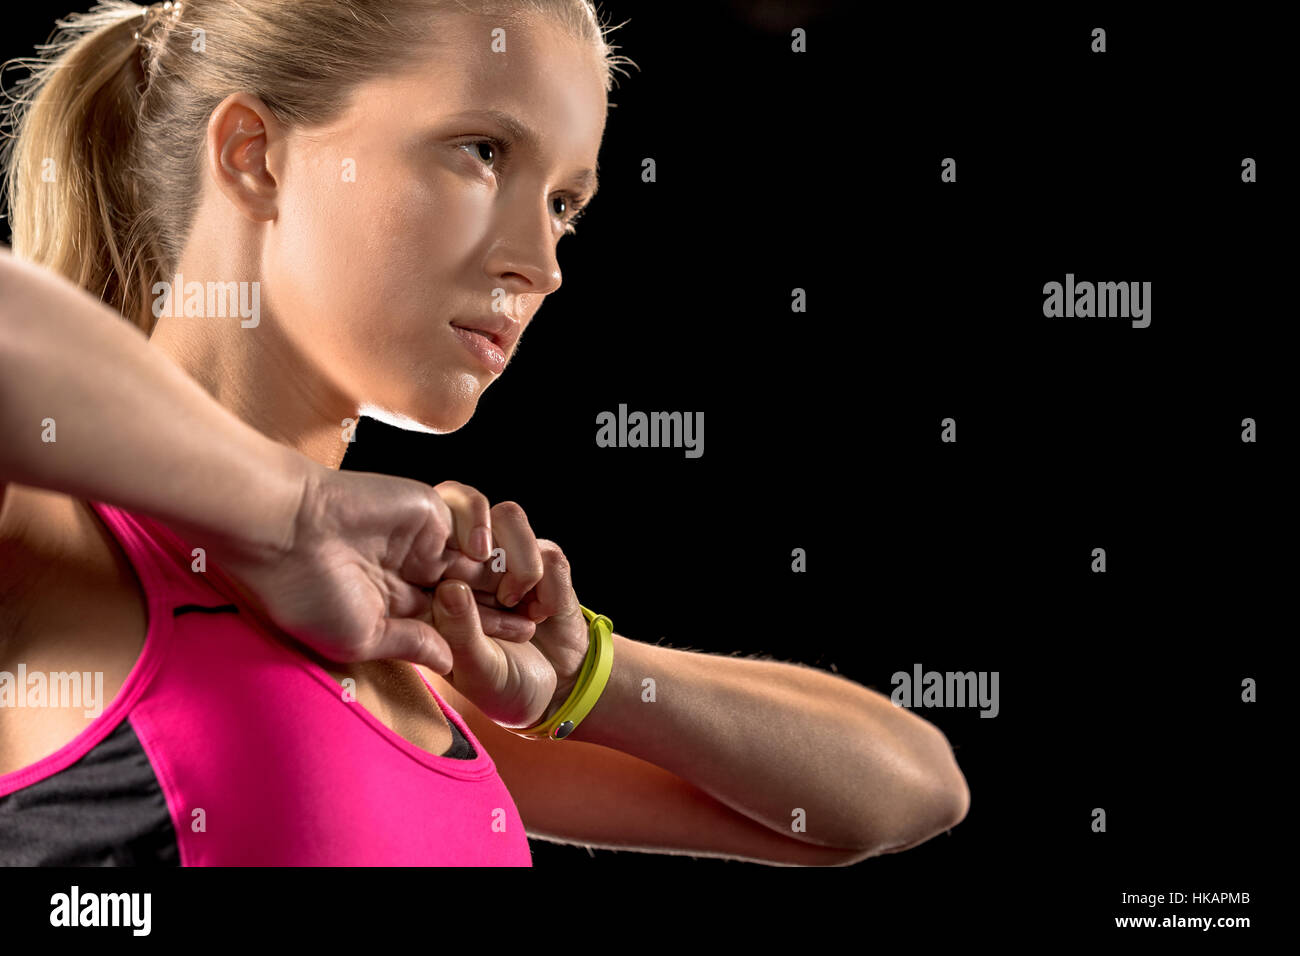 Athletic woman exercising Stock Photo